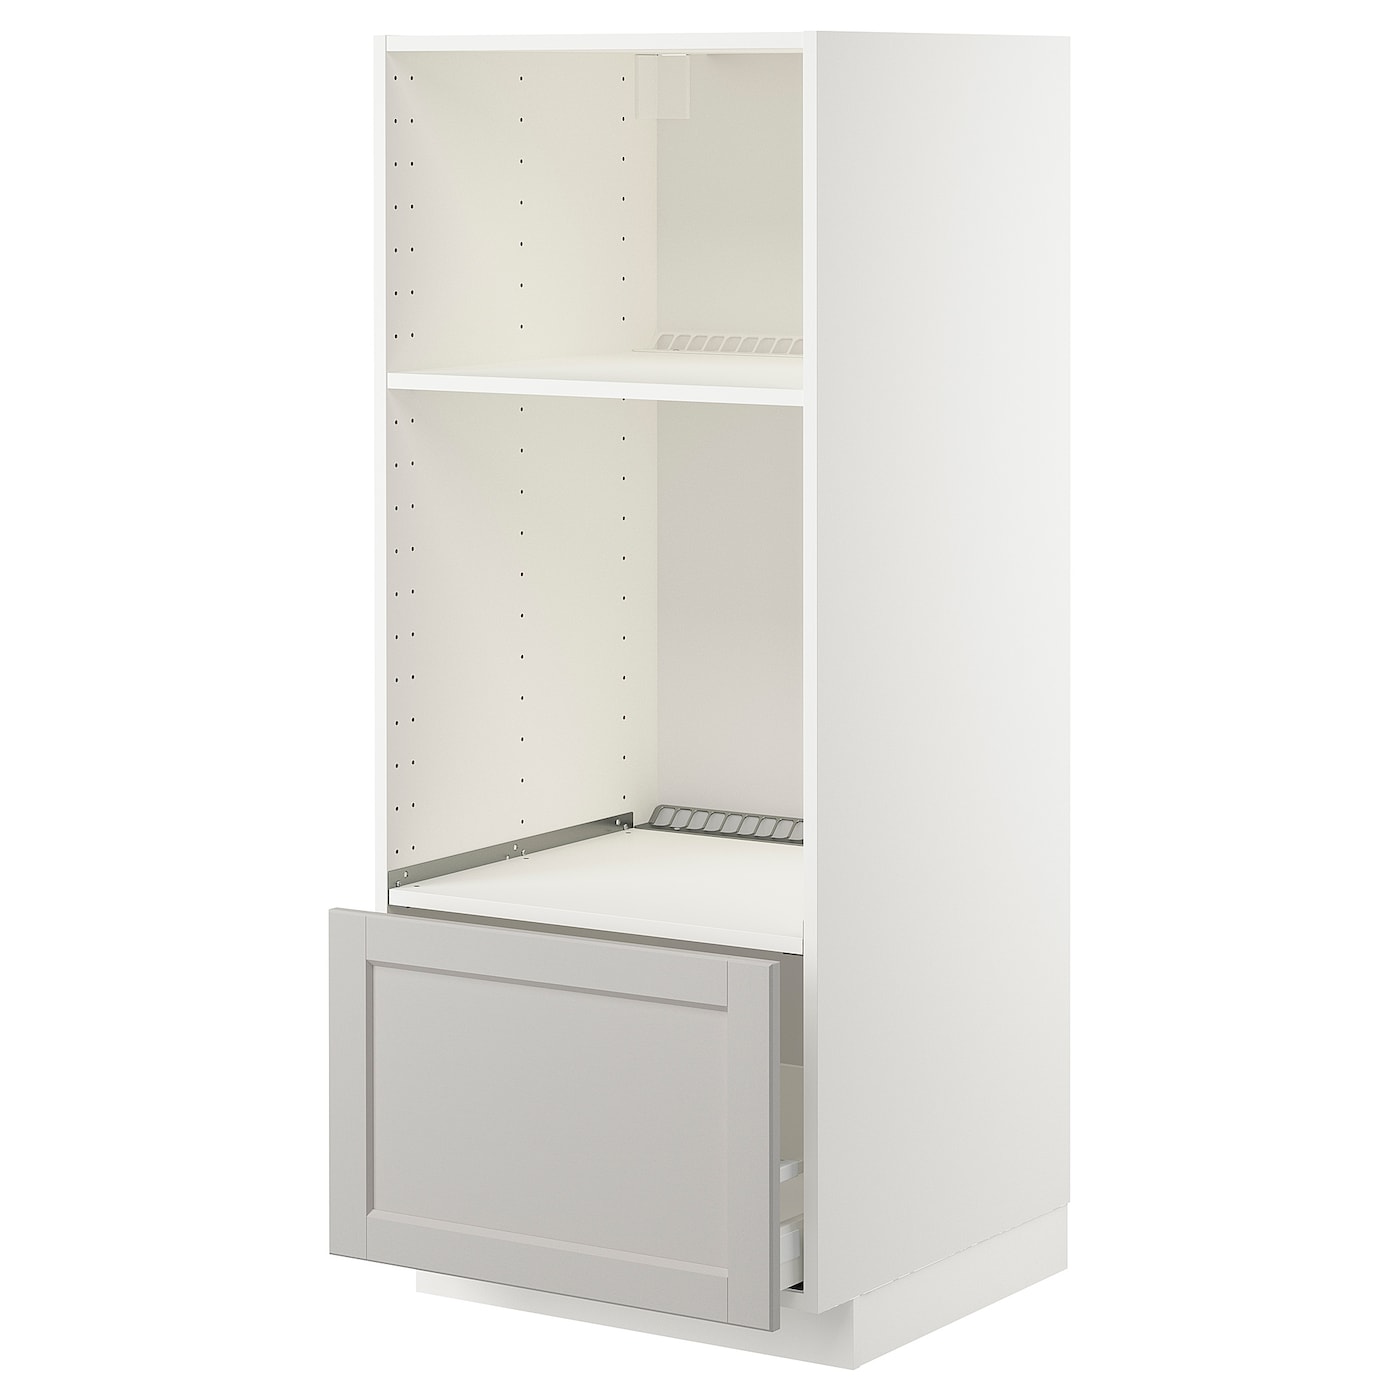 Напольный кухонный шкаф - IKEA METOD/МЕТОД ИКЕА, 140х60х60 см, белый/серый